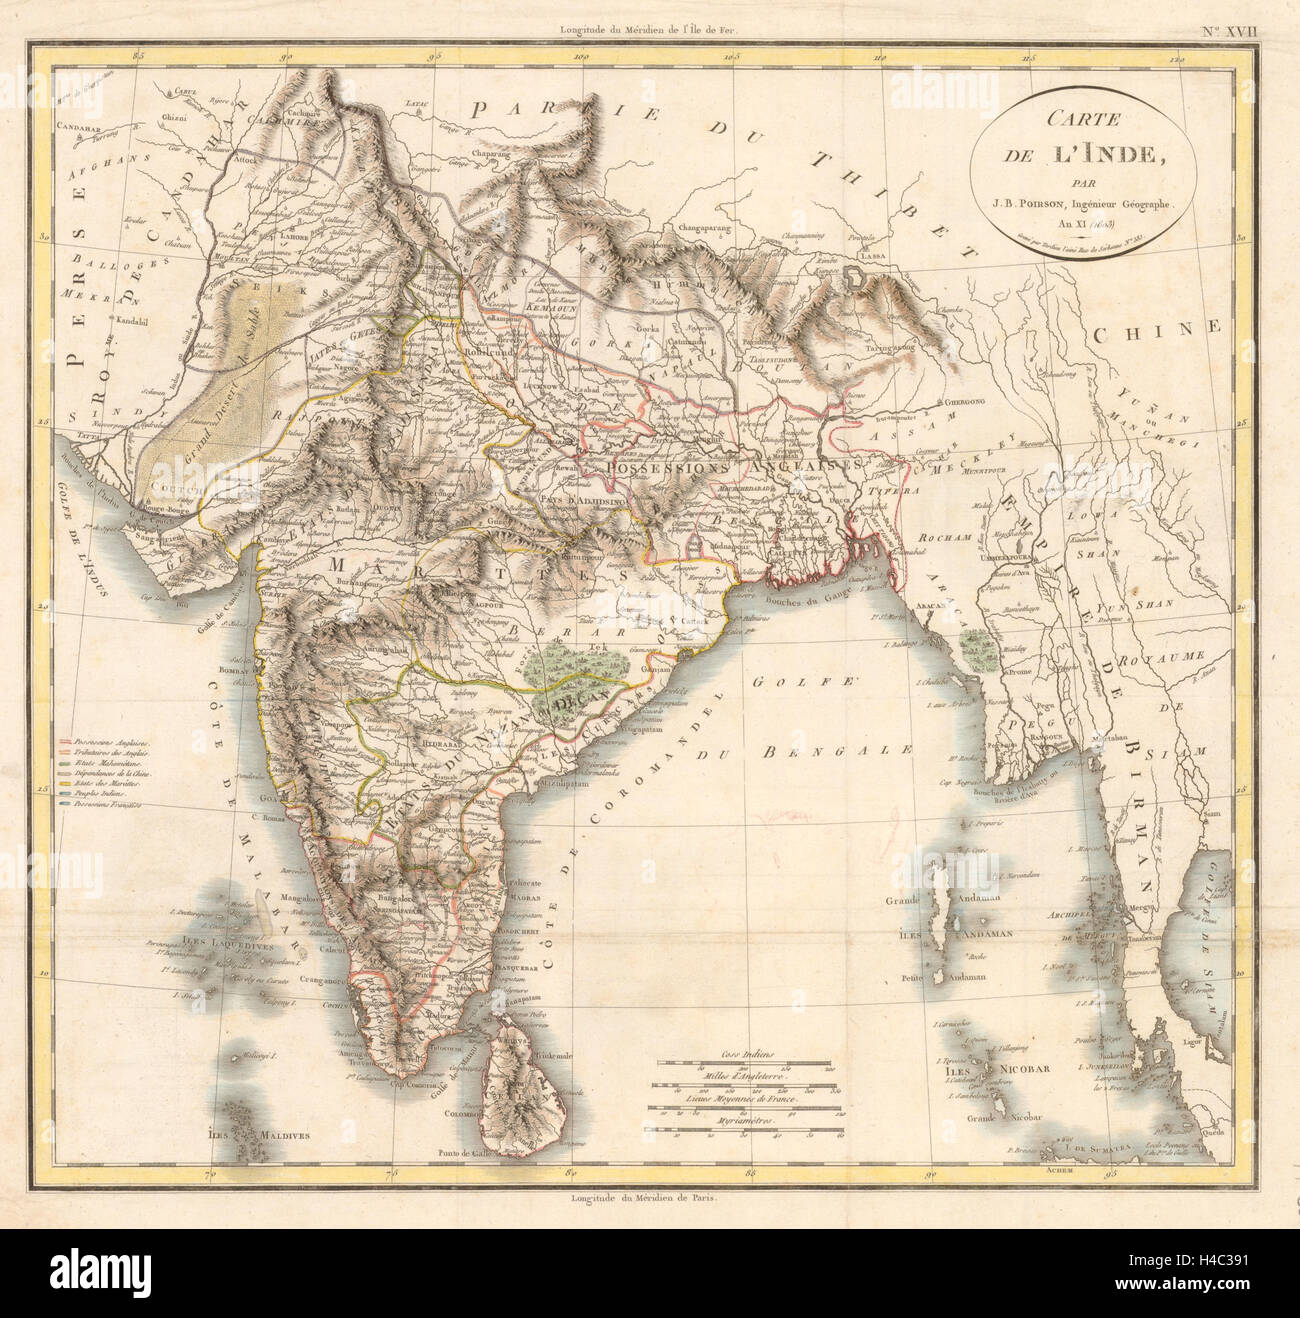 'Carte de L'Inde' by J.B. Poirson. British India & Burma 1803 old antique map Stock Photo